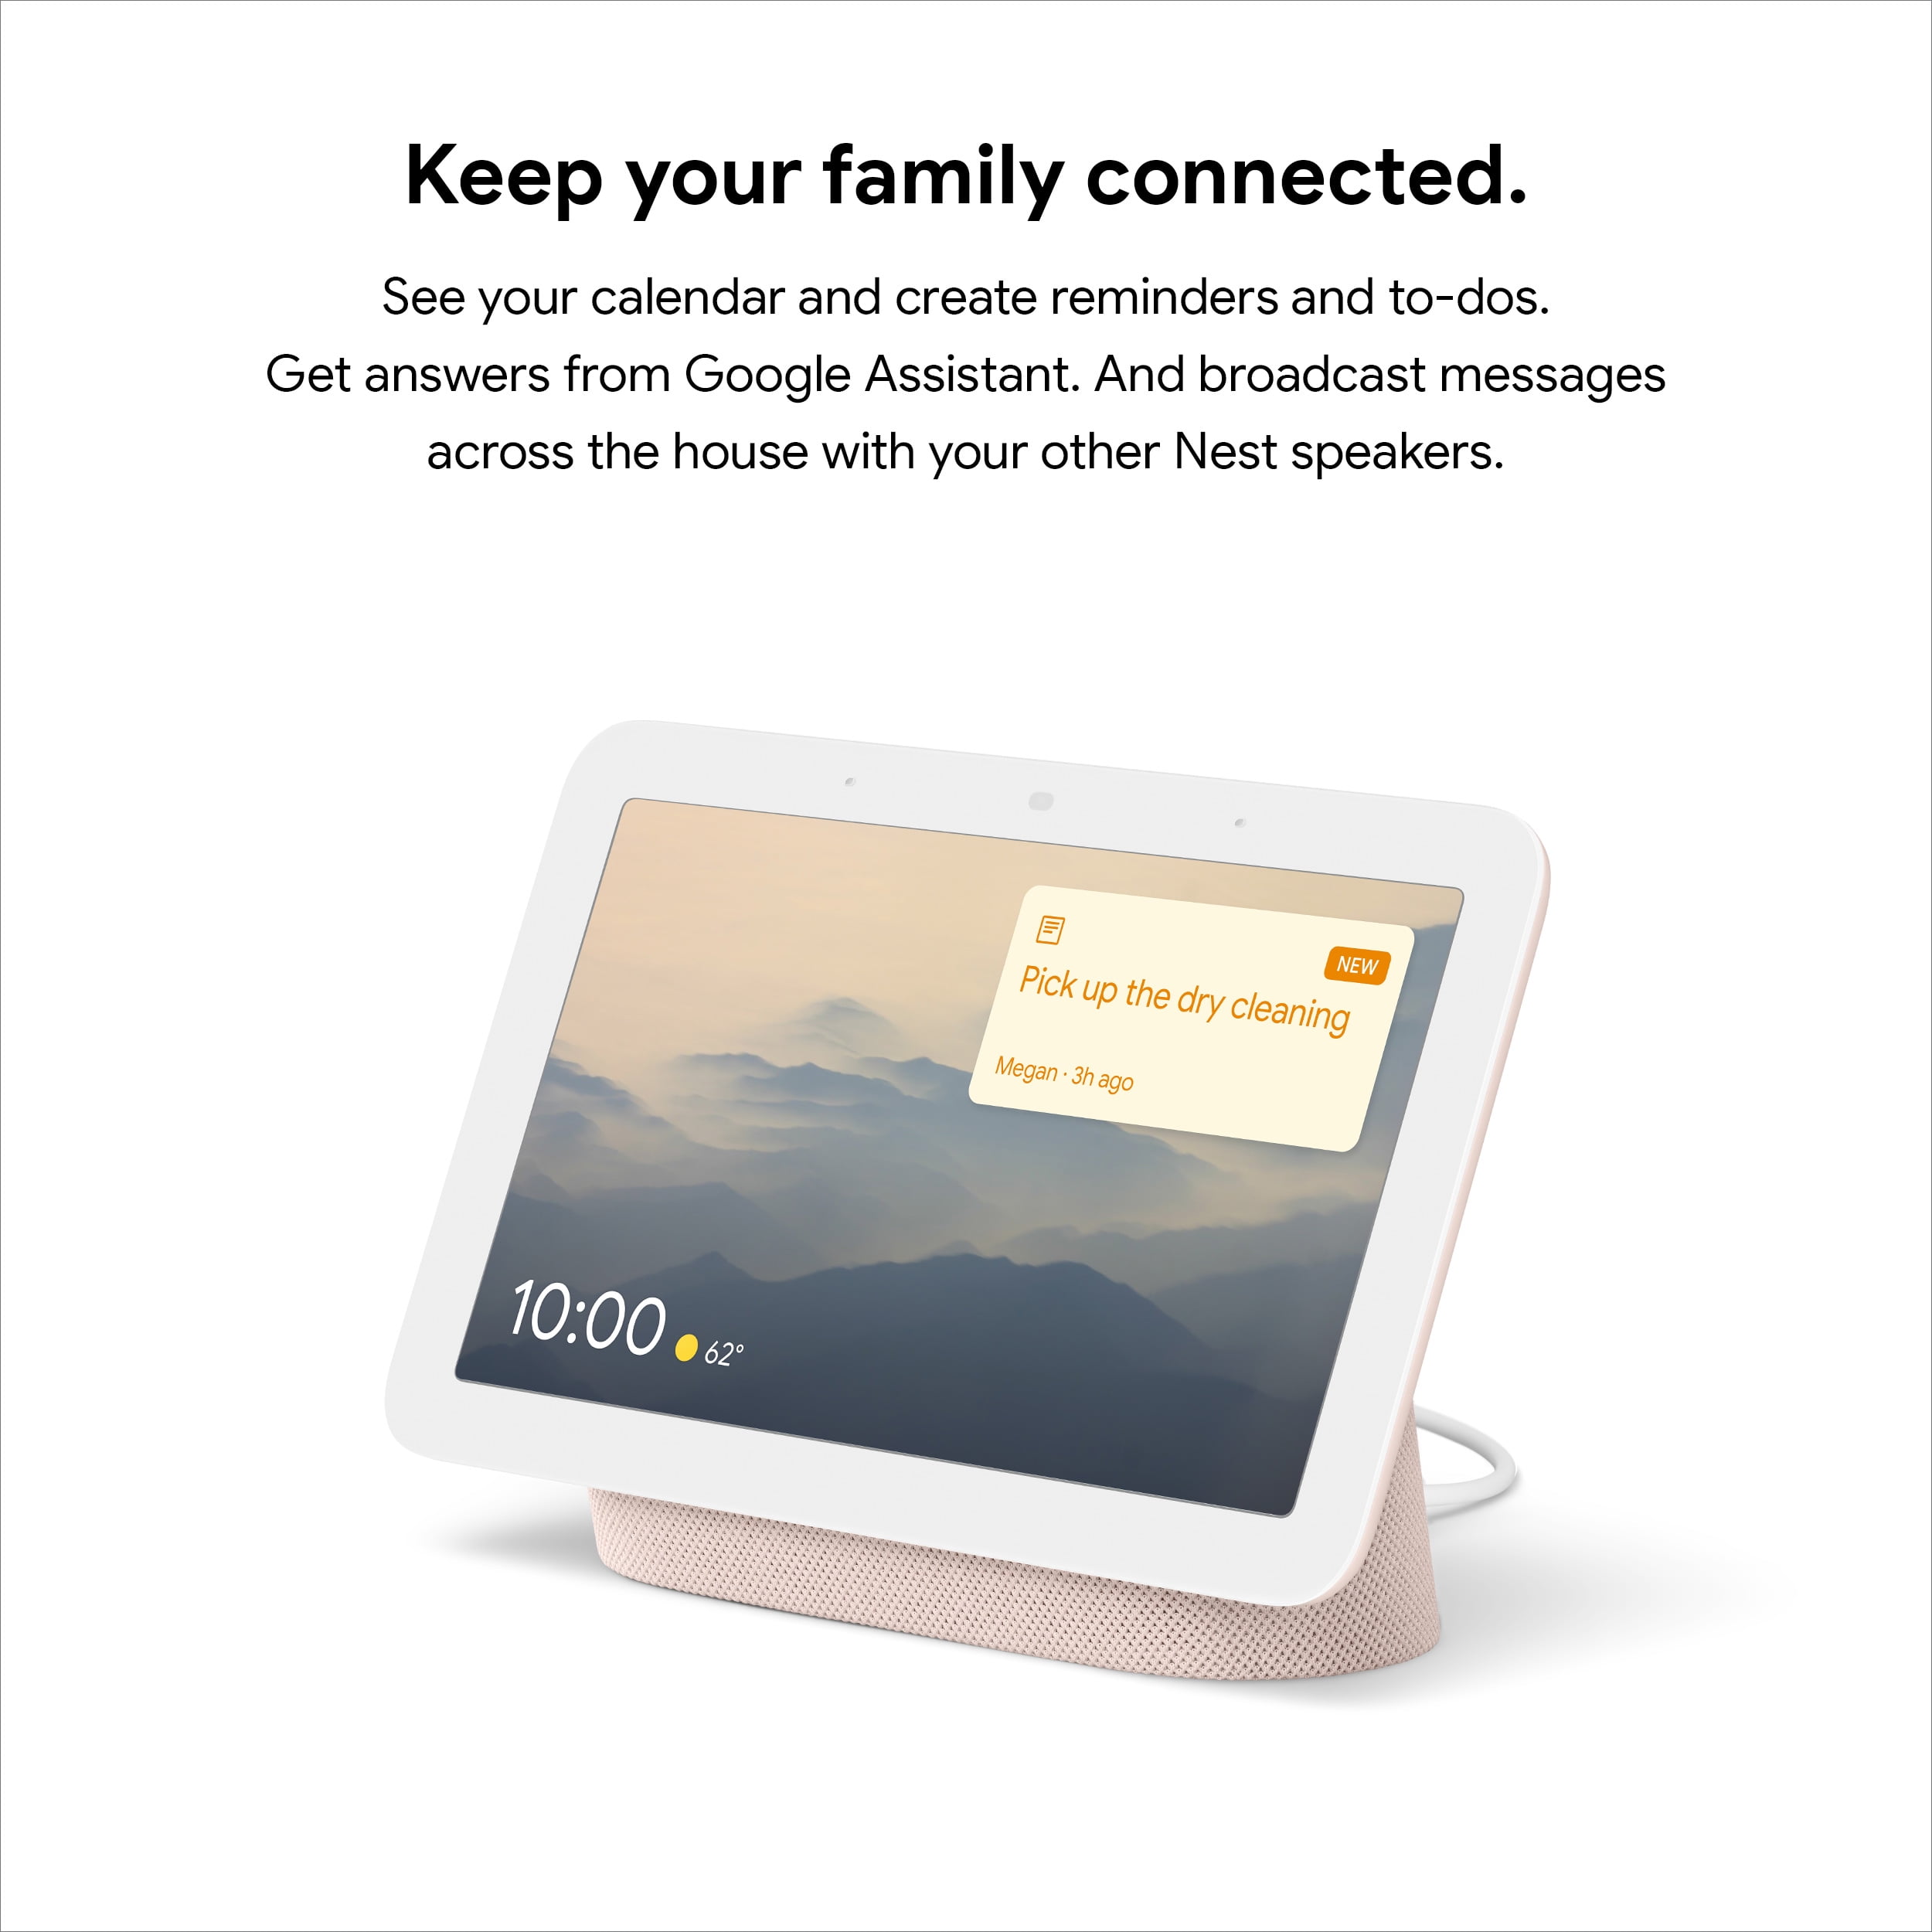 Google Nest Hub 2nd Gen - Smart Home Display with Google Assistant